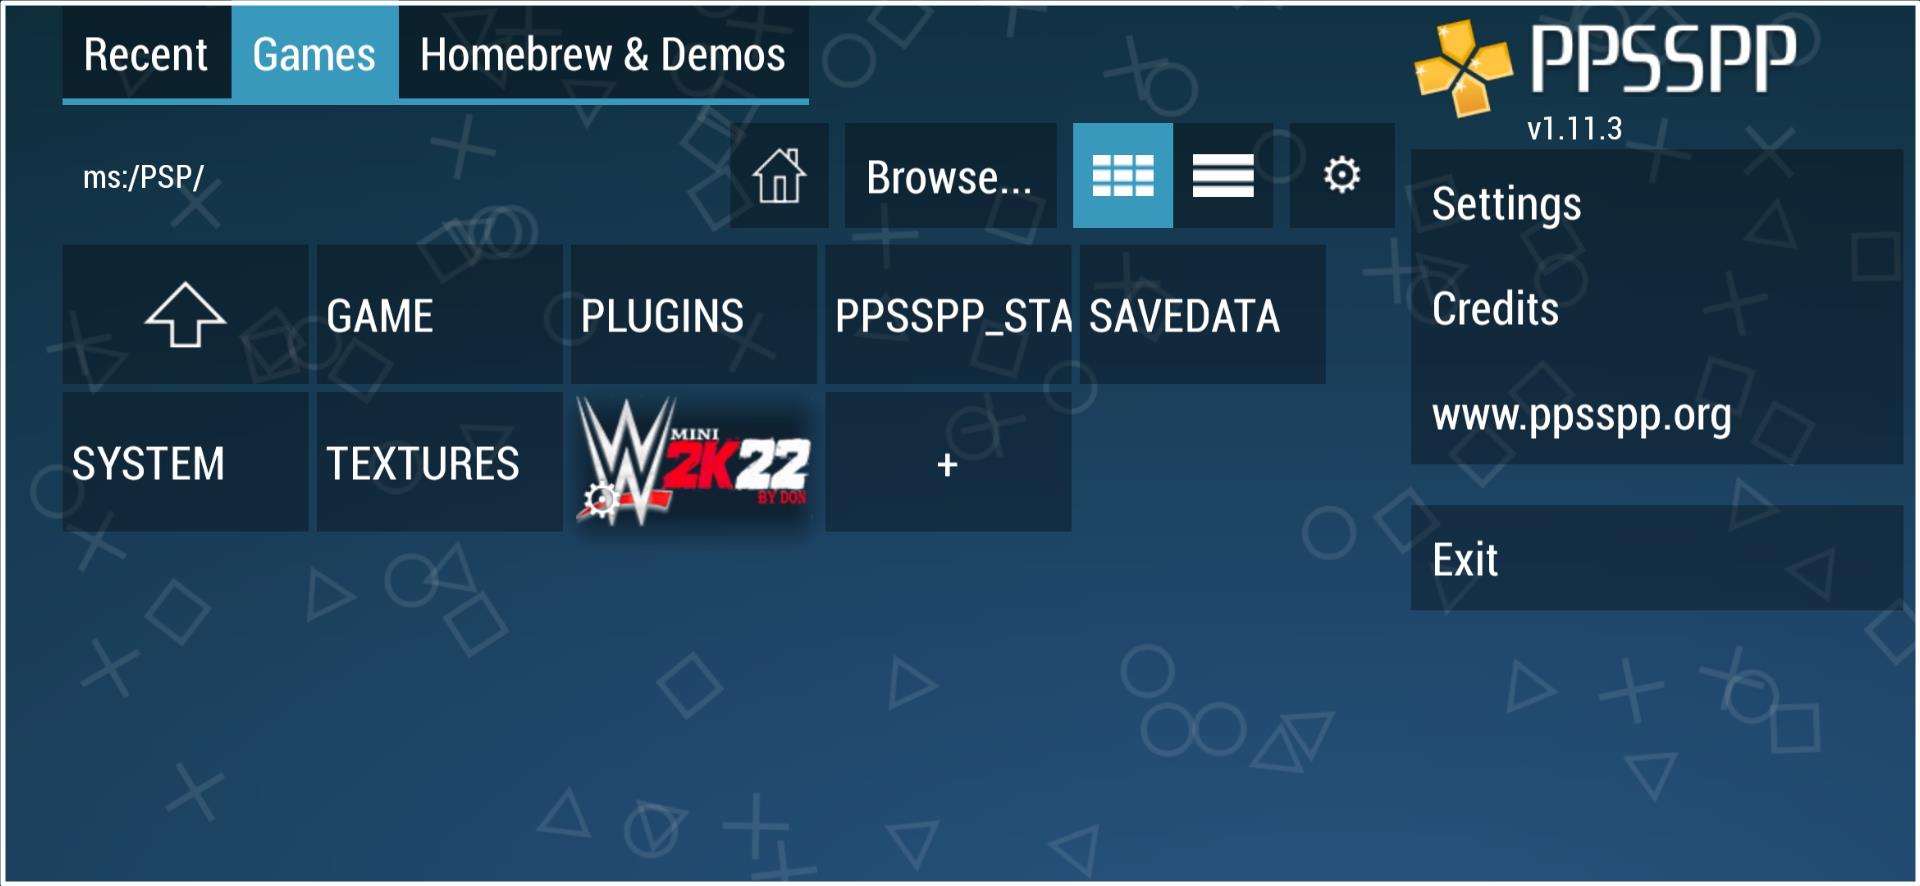 WWE 2K22 PPSSPP Download, WWE 2K22 PSP ISO+Data